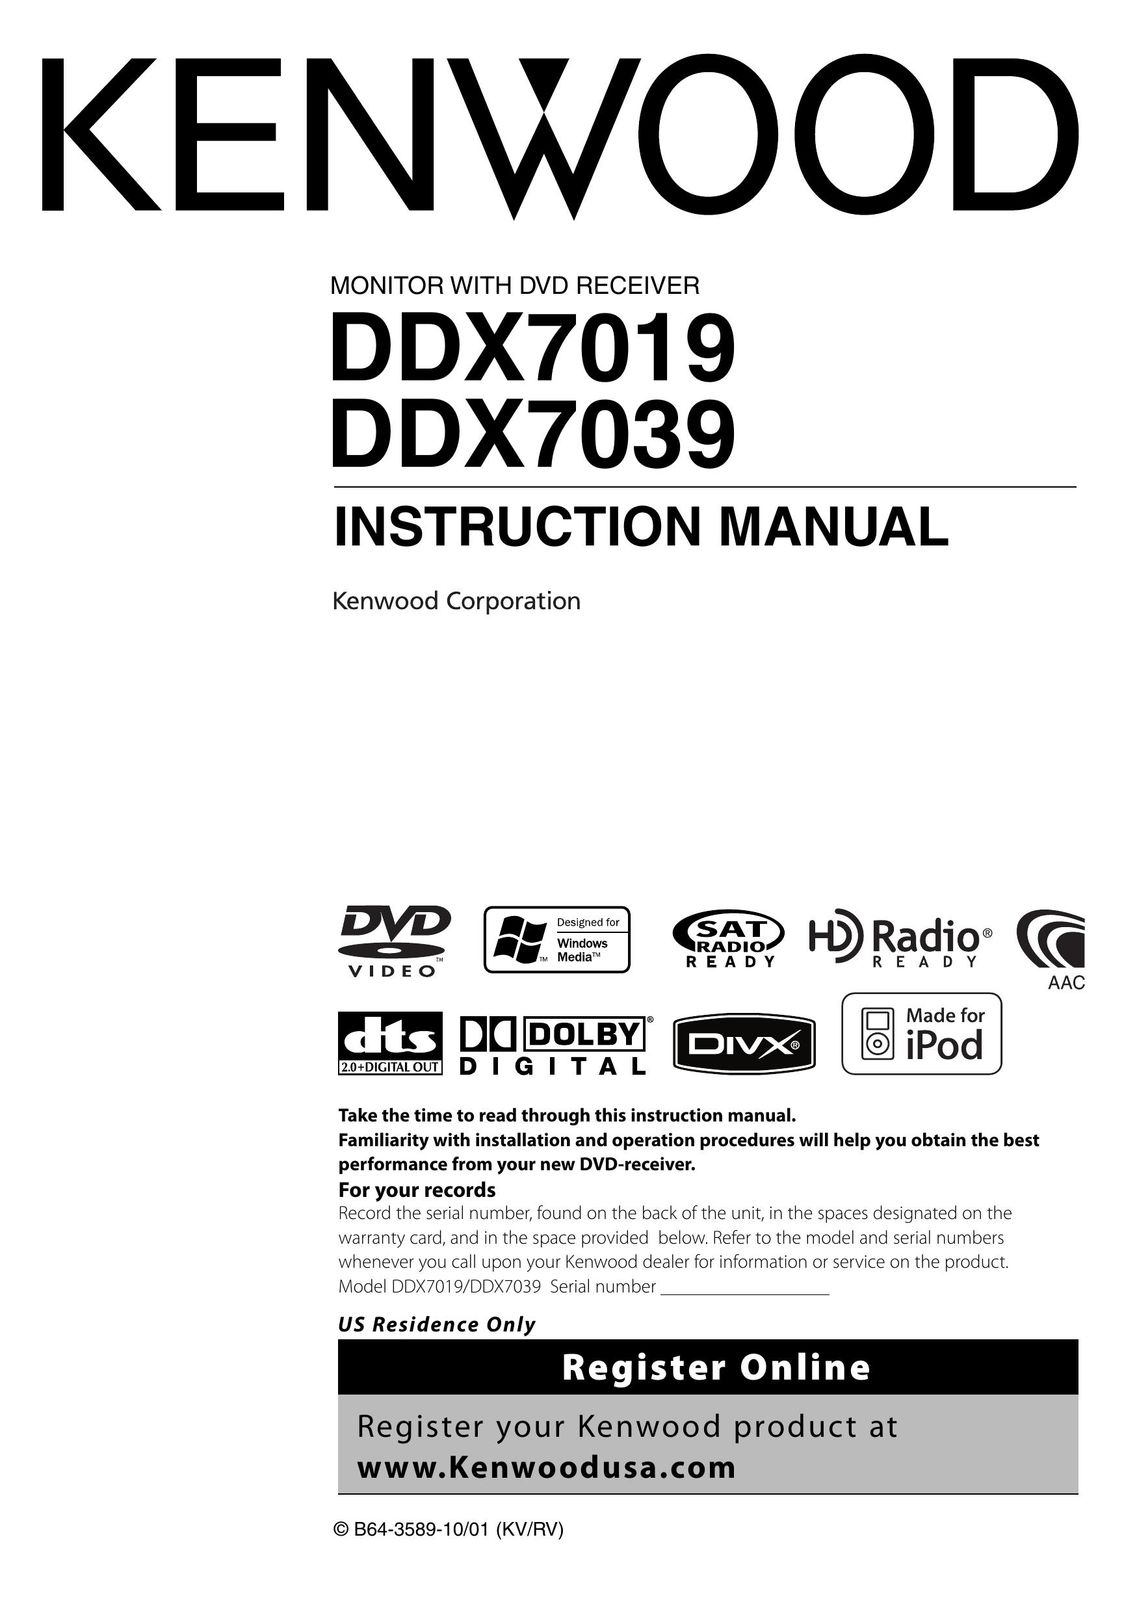 Kenwood DDX7019 Computer Monitor User Manual